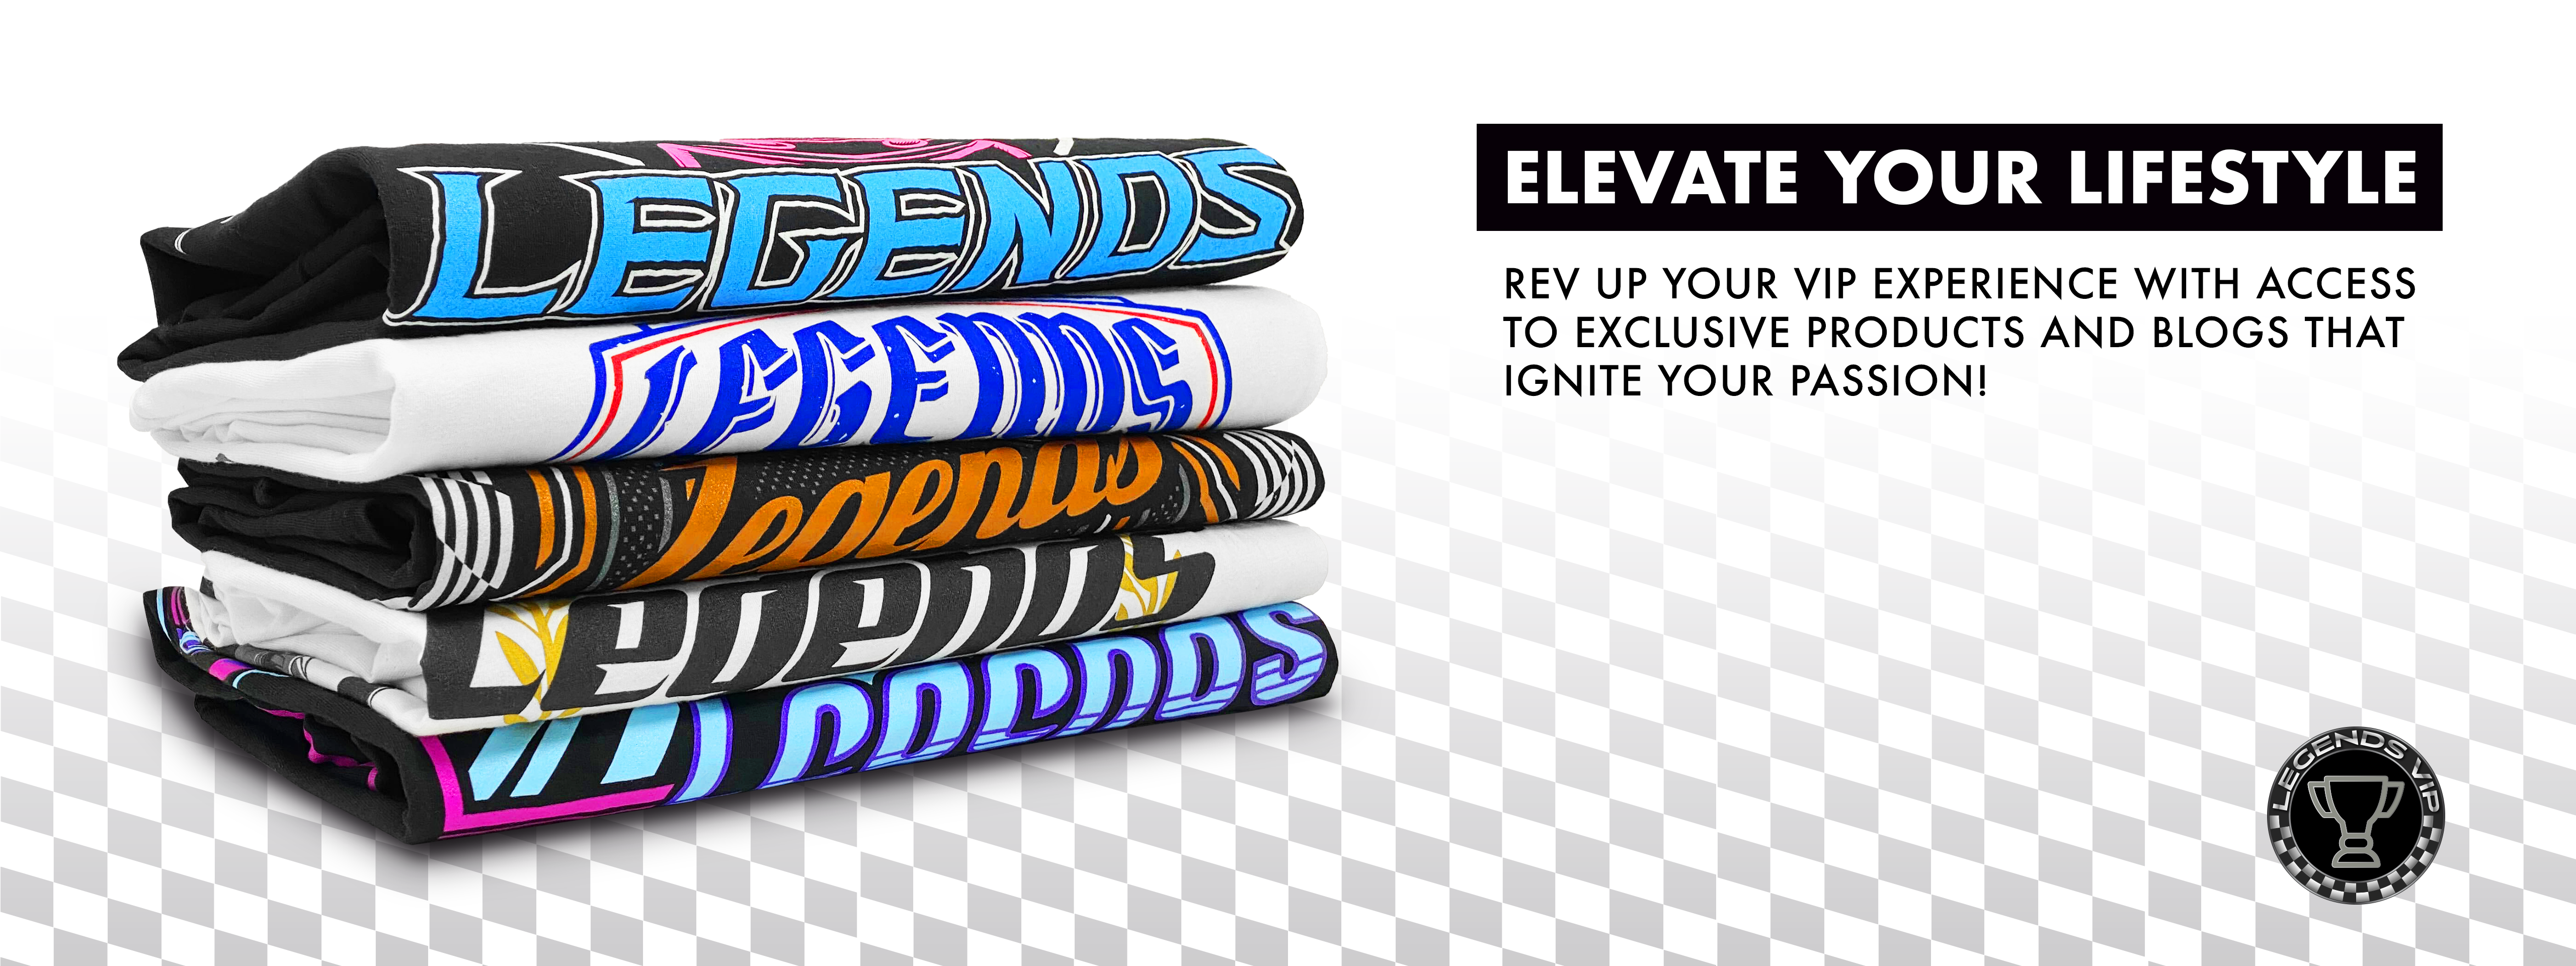 VIP Legends Website Banner